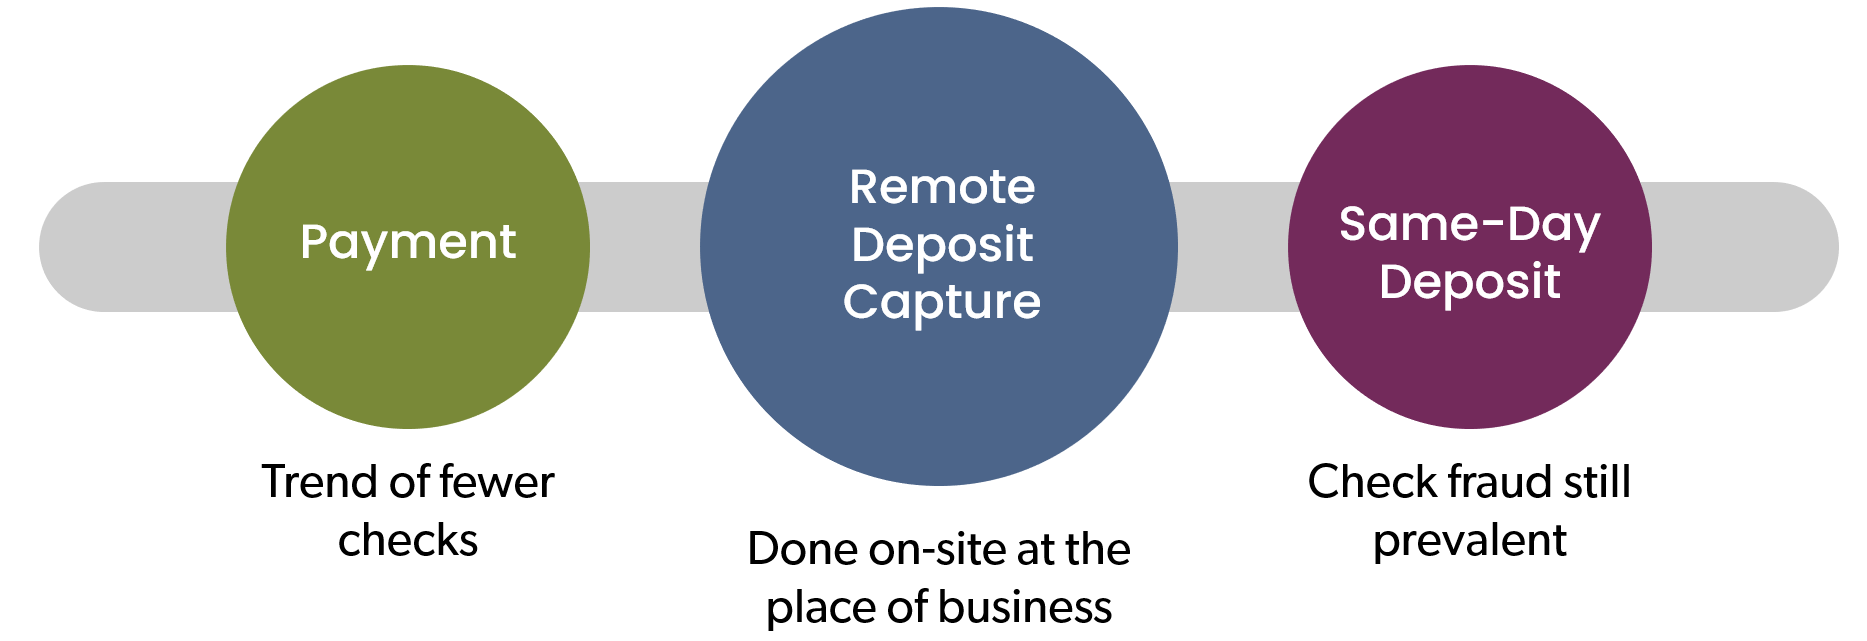 2000s Remote Deposit technology process